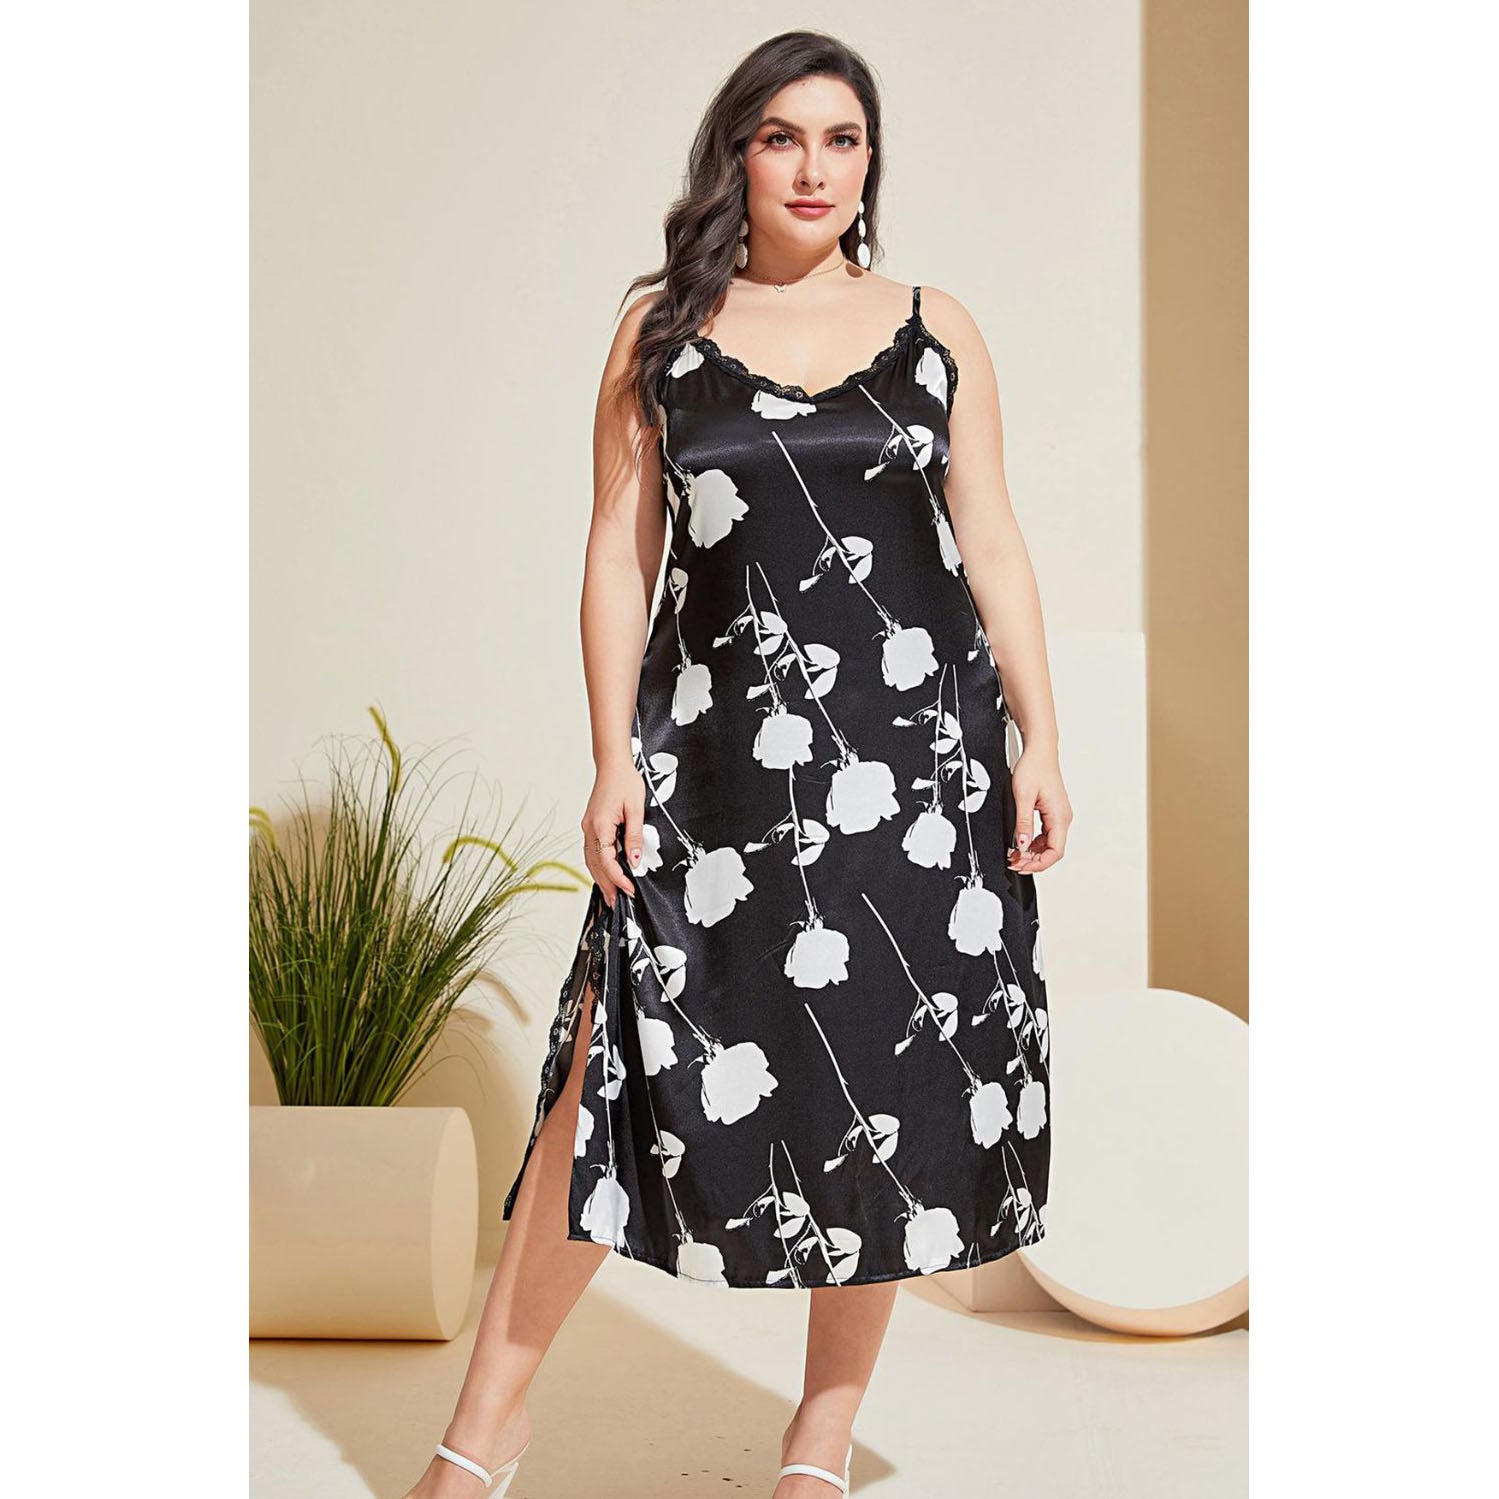 Model wearing black plus size floral pattern nightgown